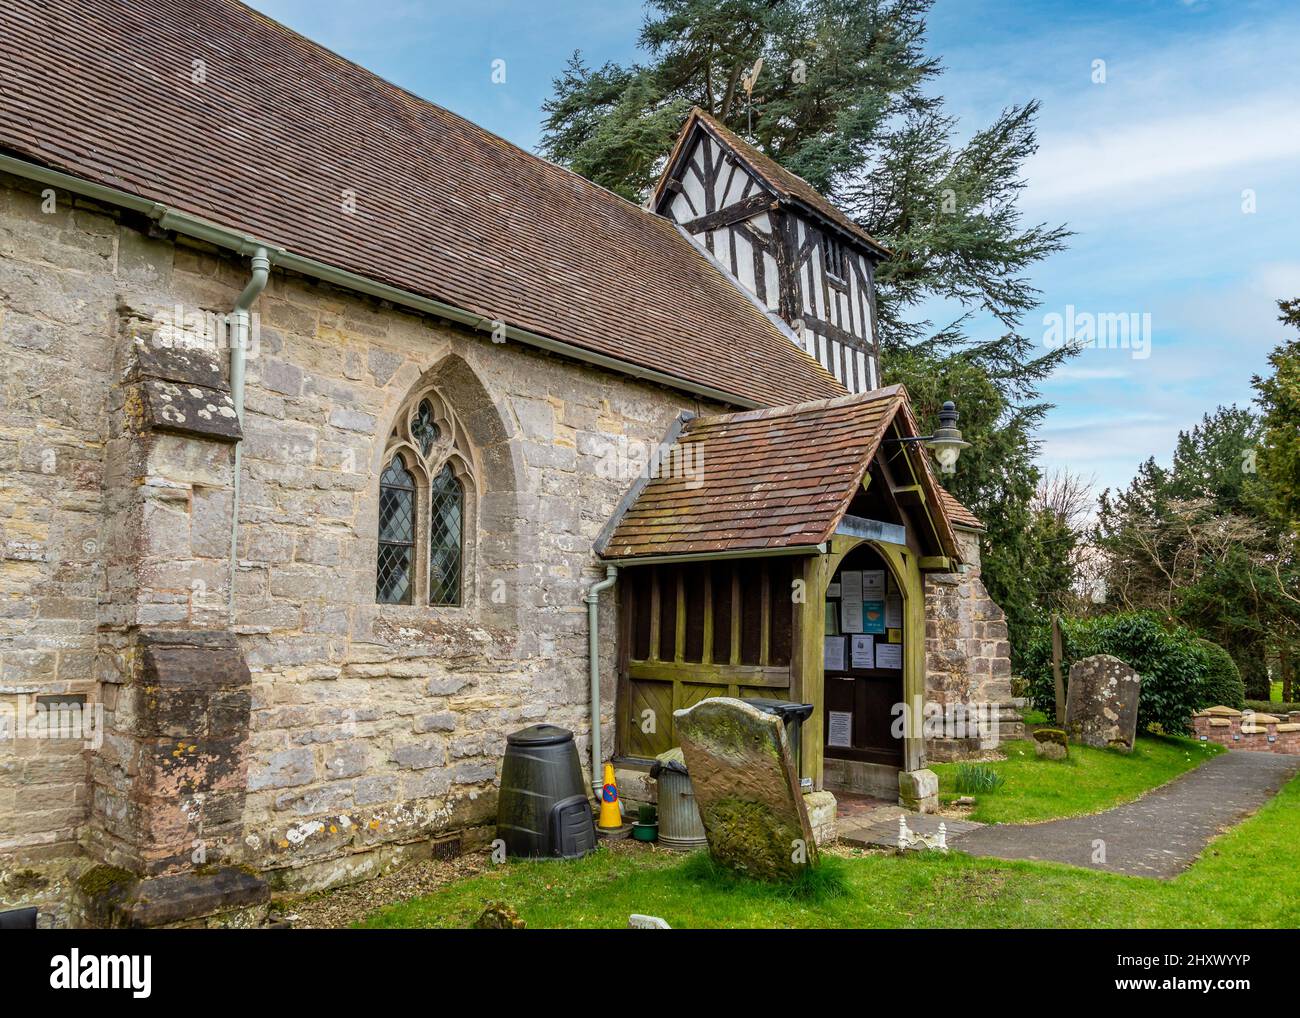 St. James Church in Kington village, Worcestershire, England. Stock Photo